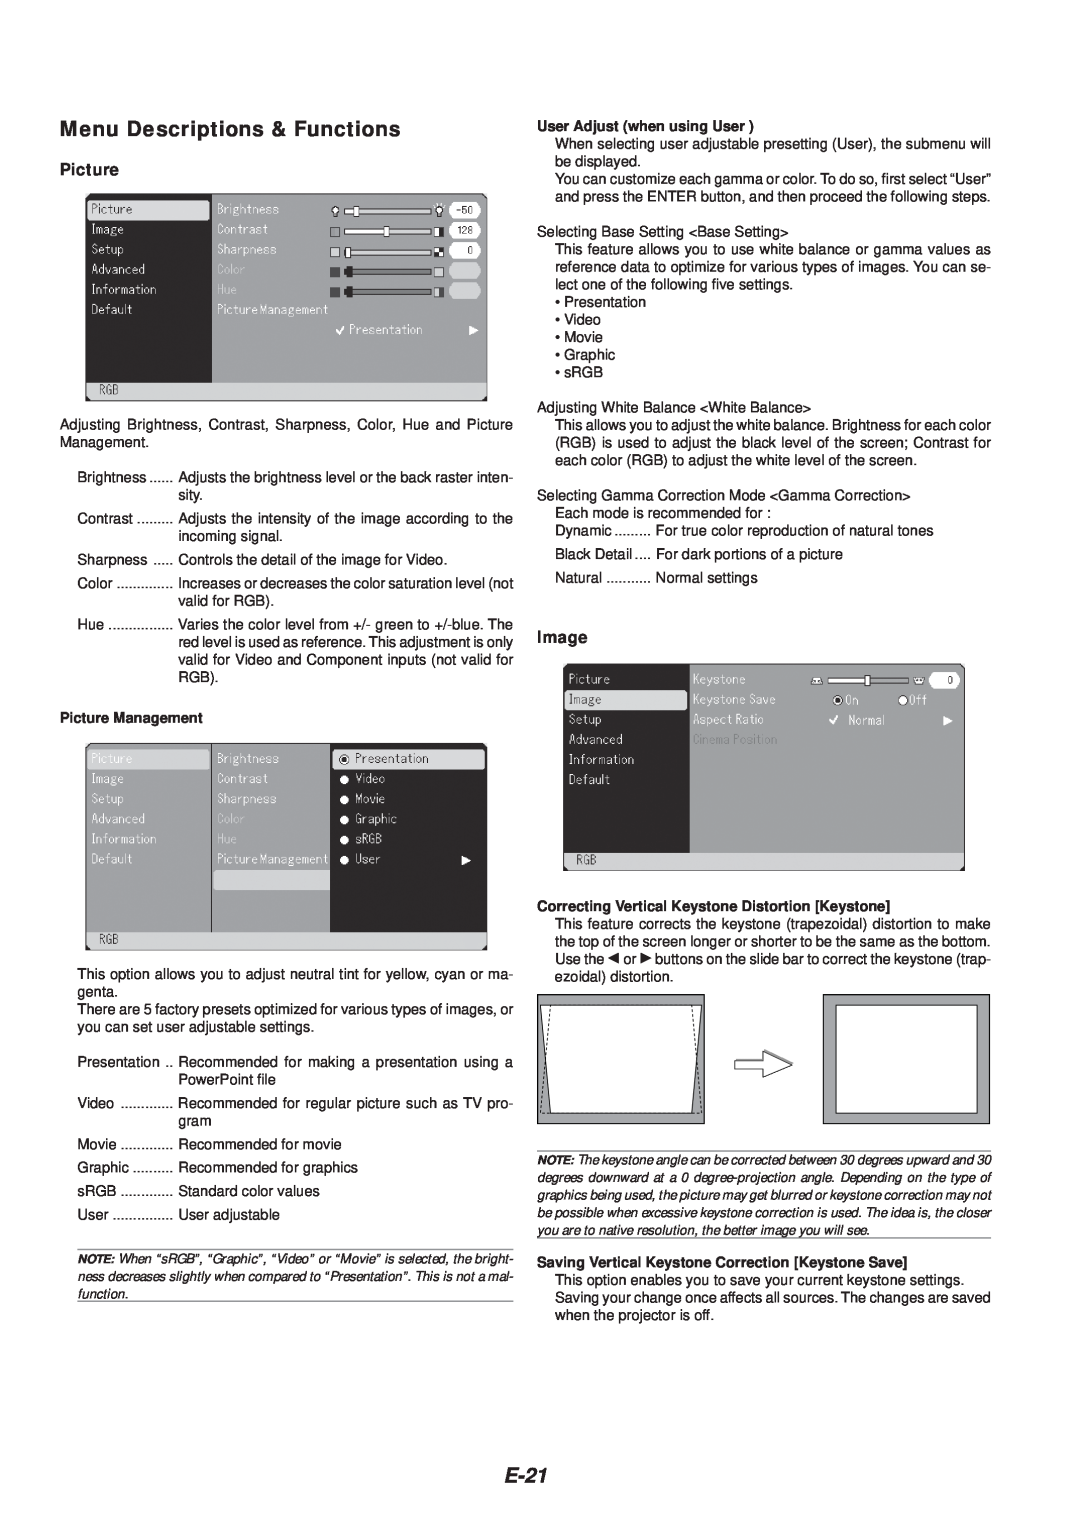 NEC VT46 user manual Menu Descriptions & Functions, E-21, Image, Picture Management, User Adjust when using User 